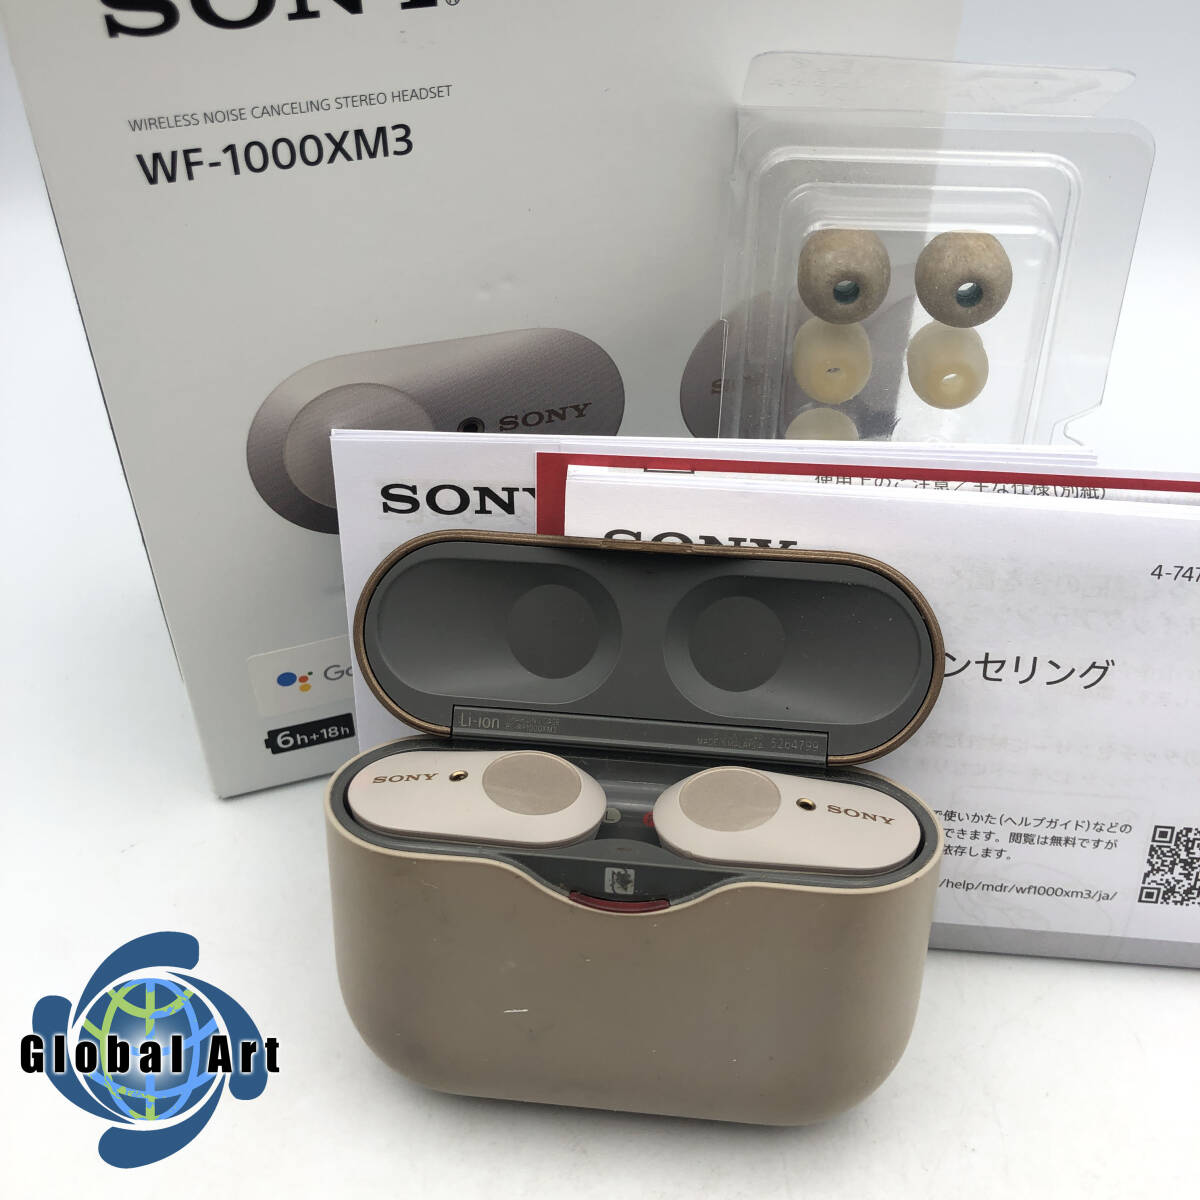 *E04360/SONY Sony./ wireless earphone / wireless noise cancel ring stereo headset /WF-1000XM3/ box * accessory attaching / electrification OK